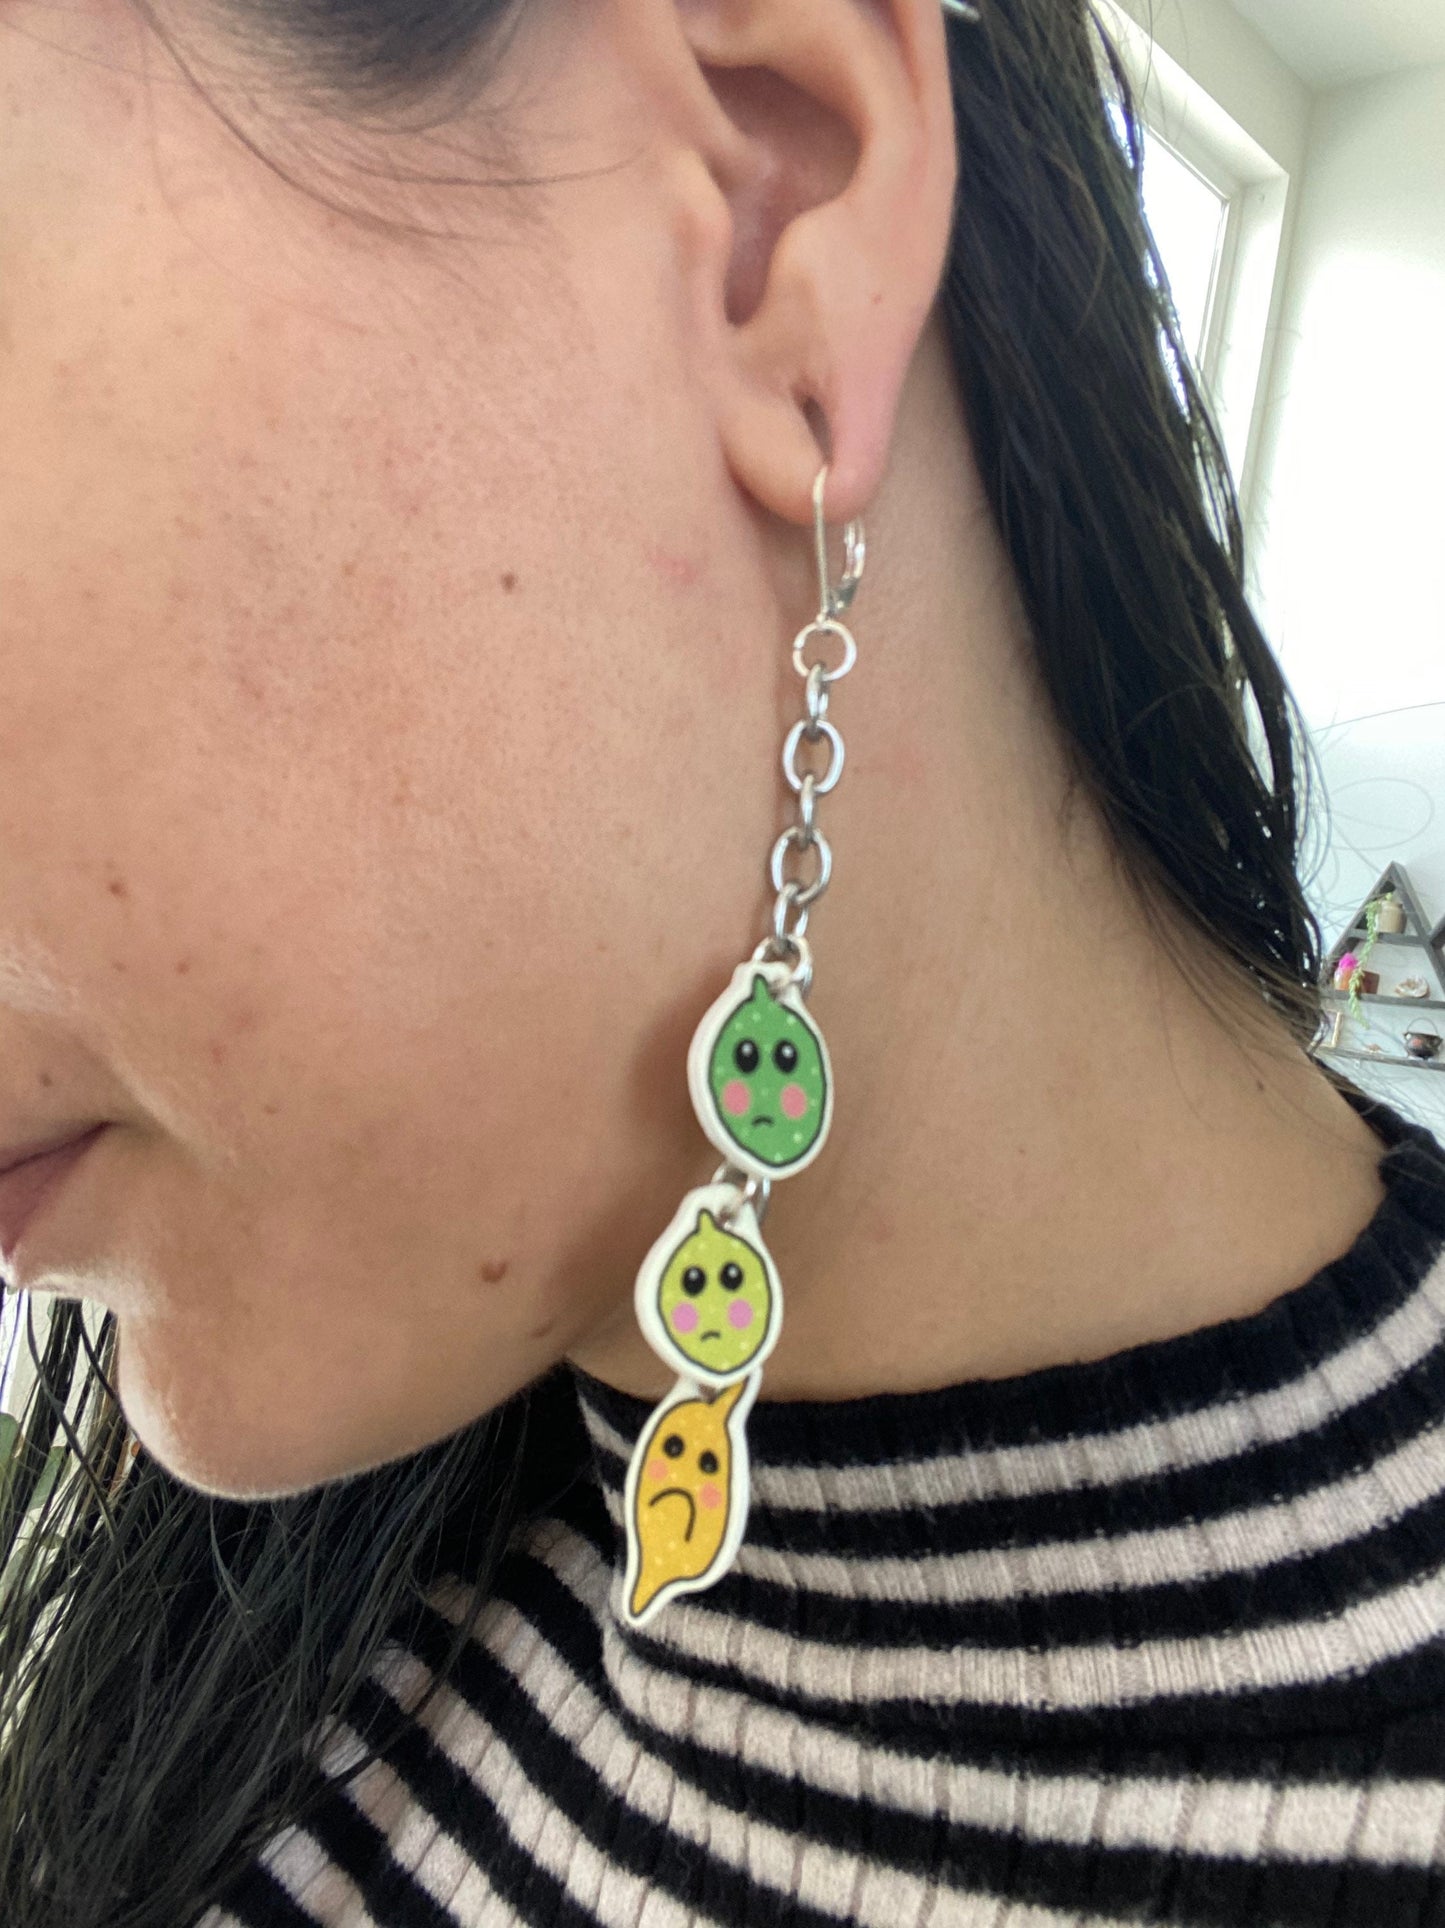 sad citrus earrings